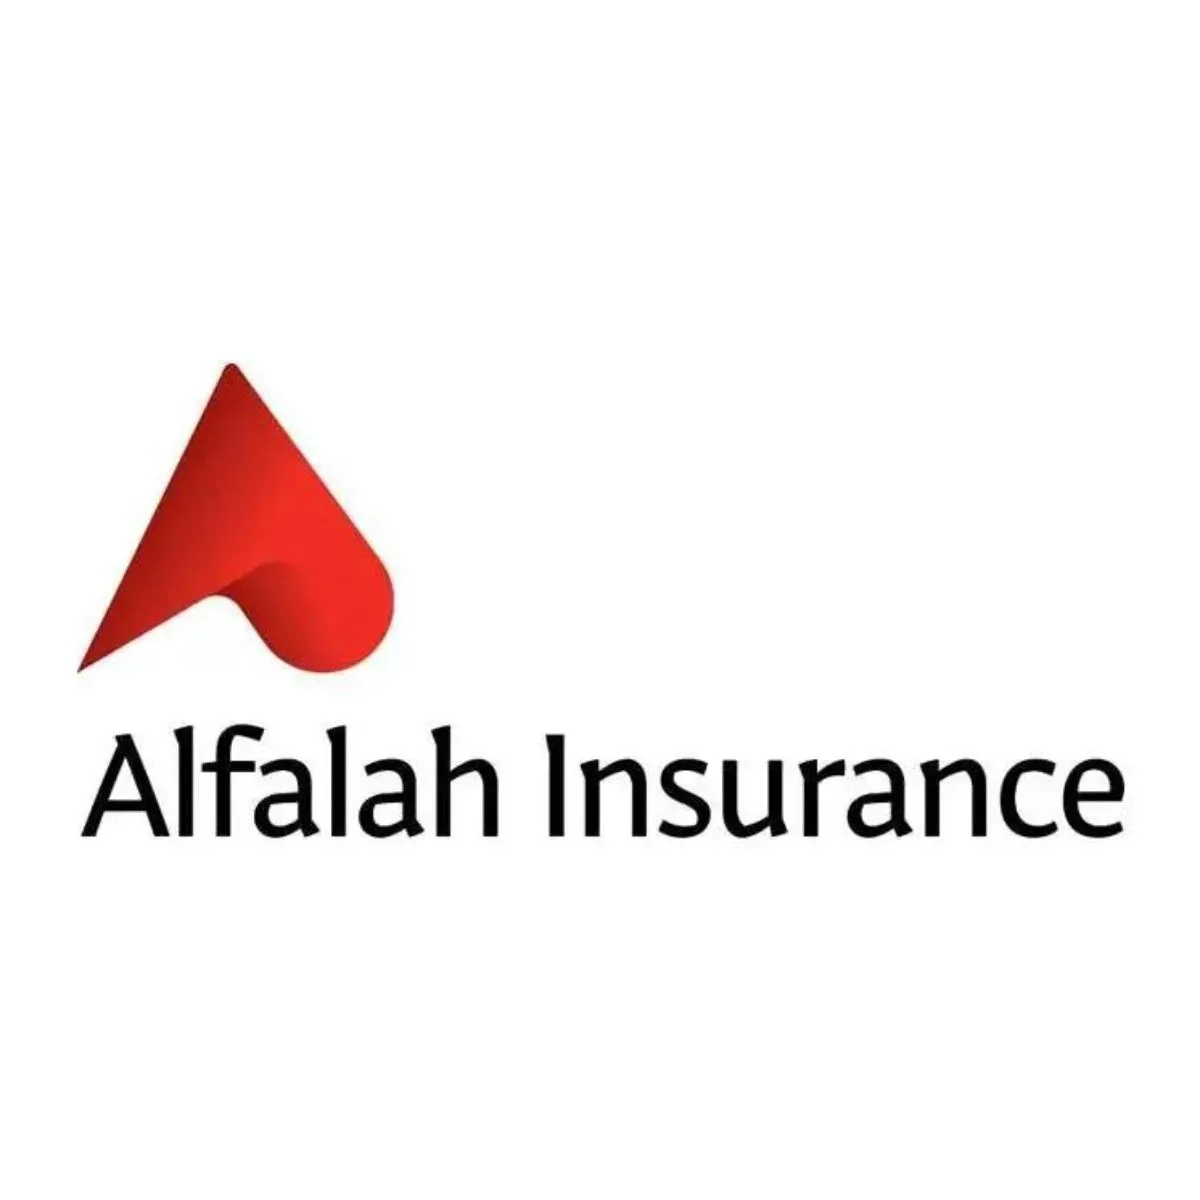 Alfalah Insurance Company Limited